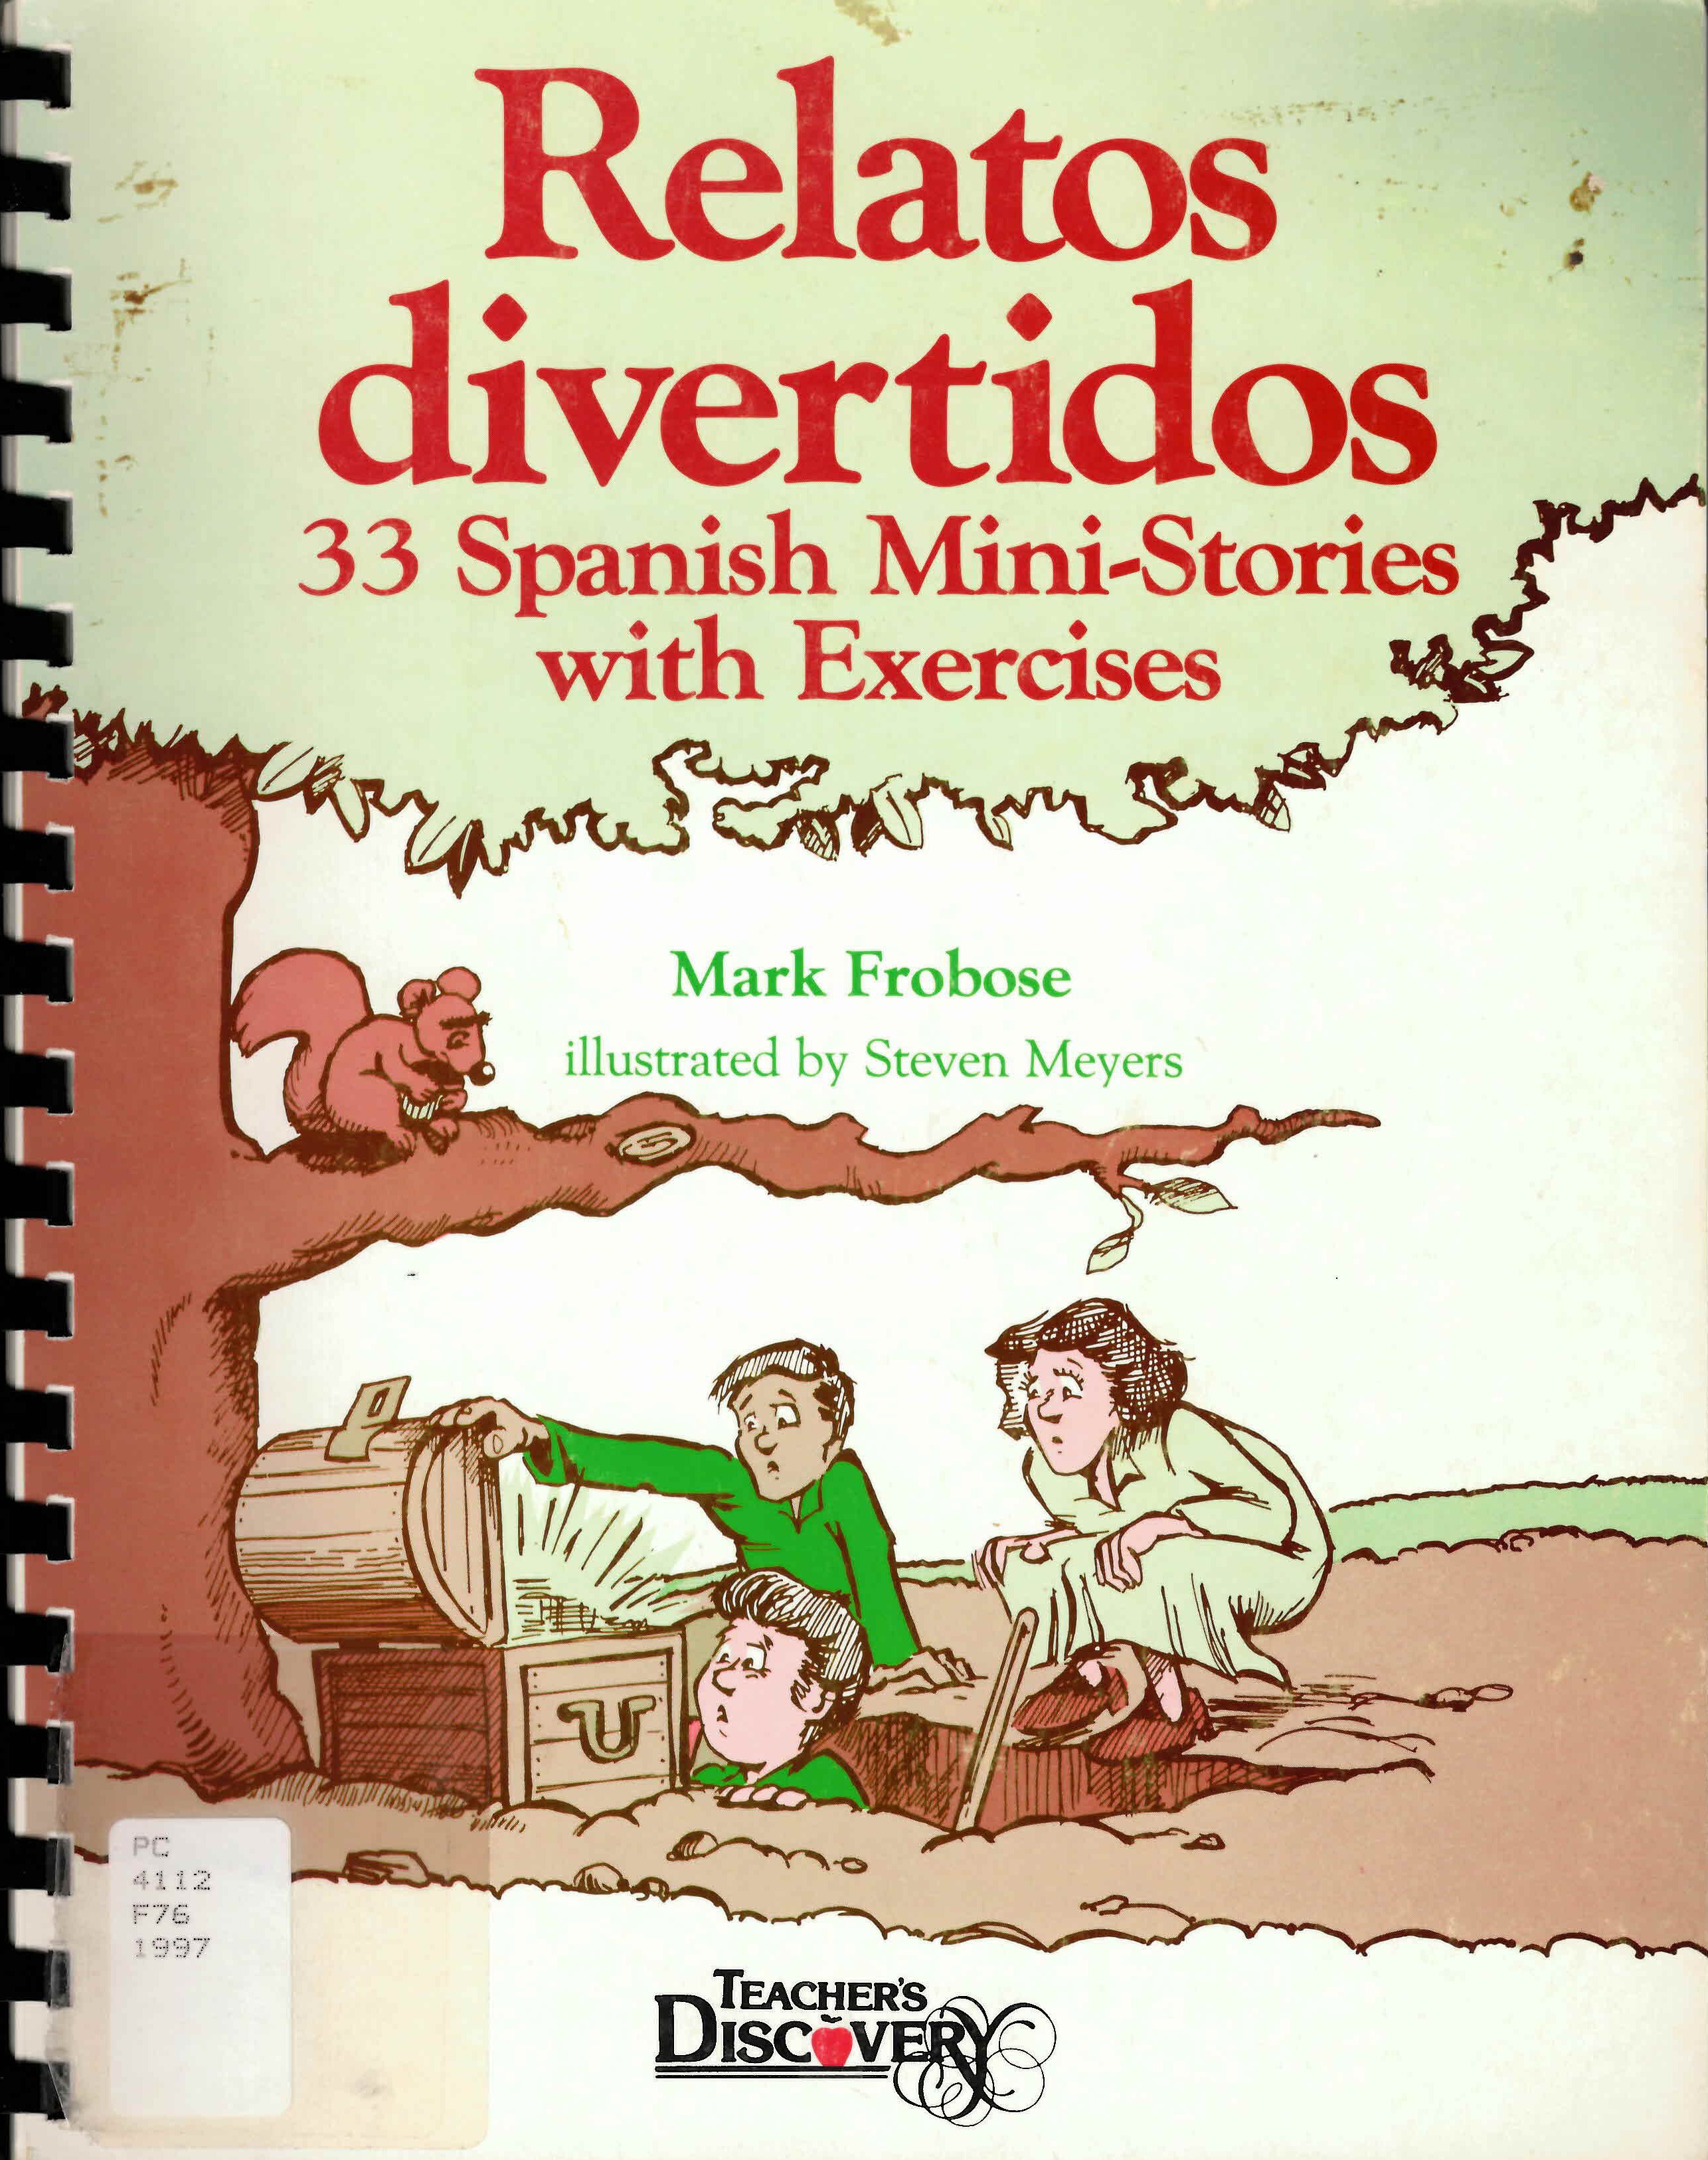 Relatos divertidos: : 33 Spanish mini-stories with exercises